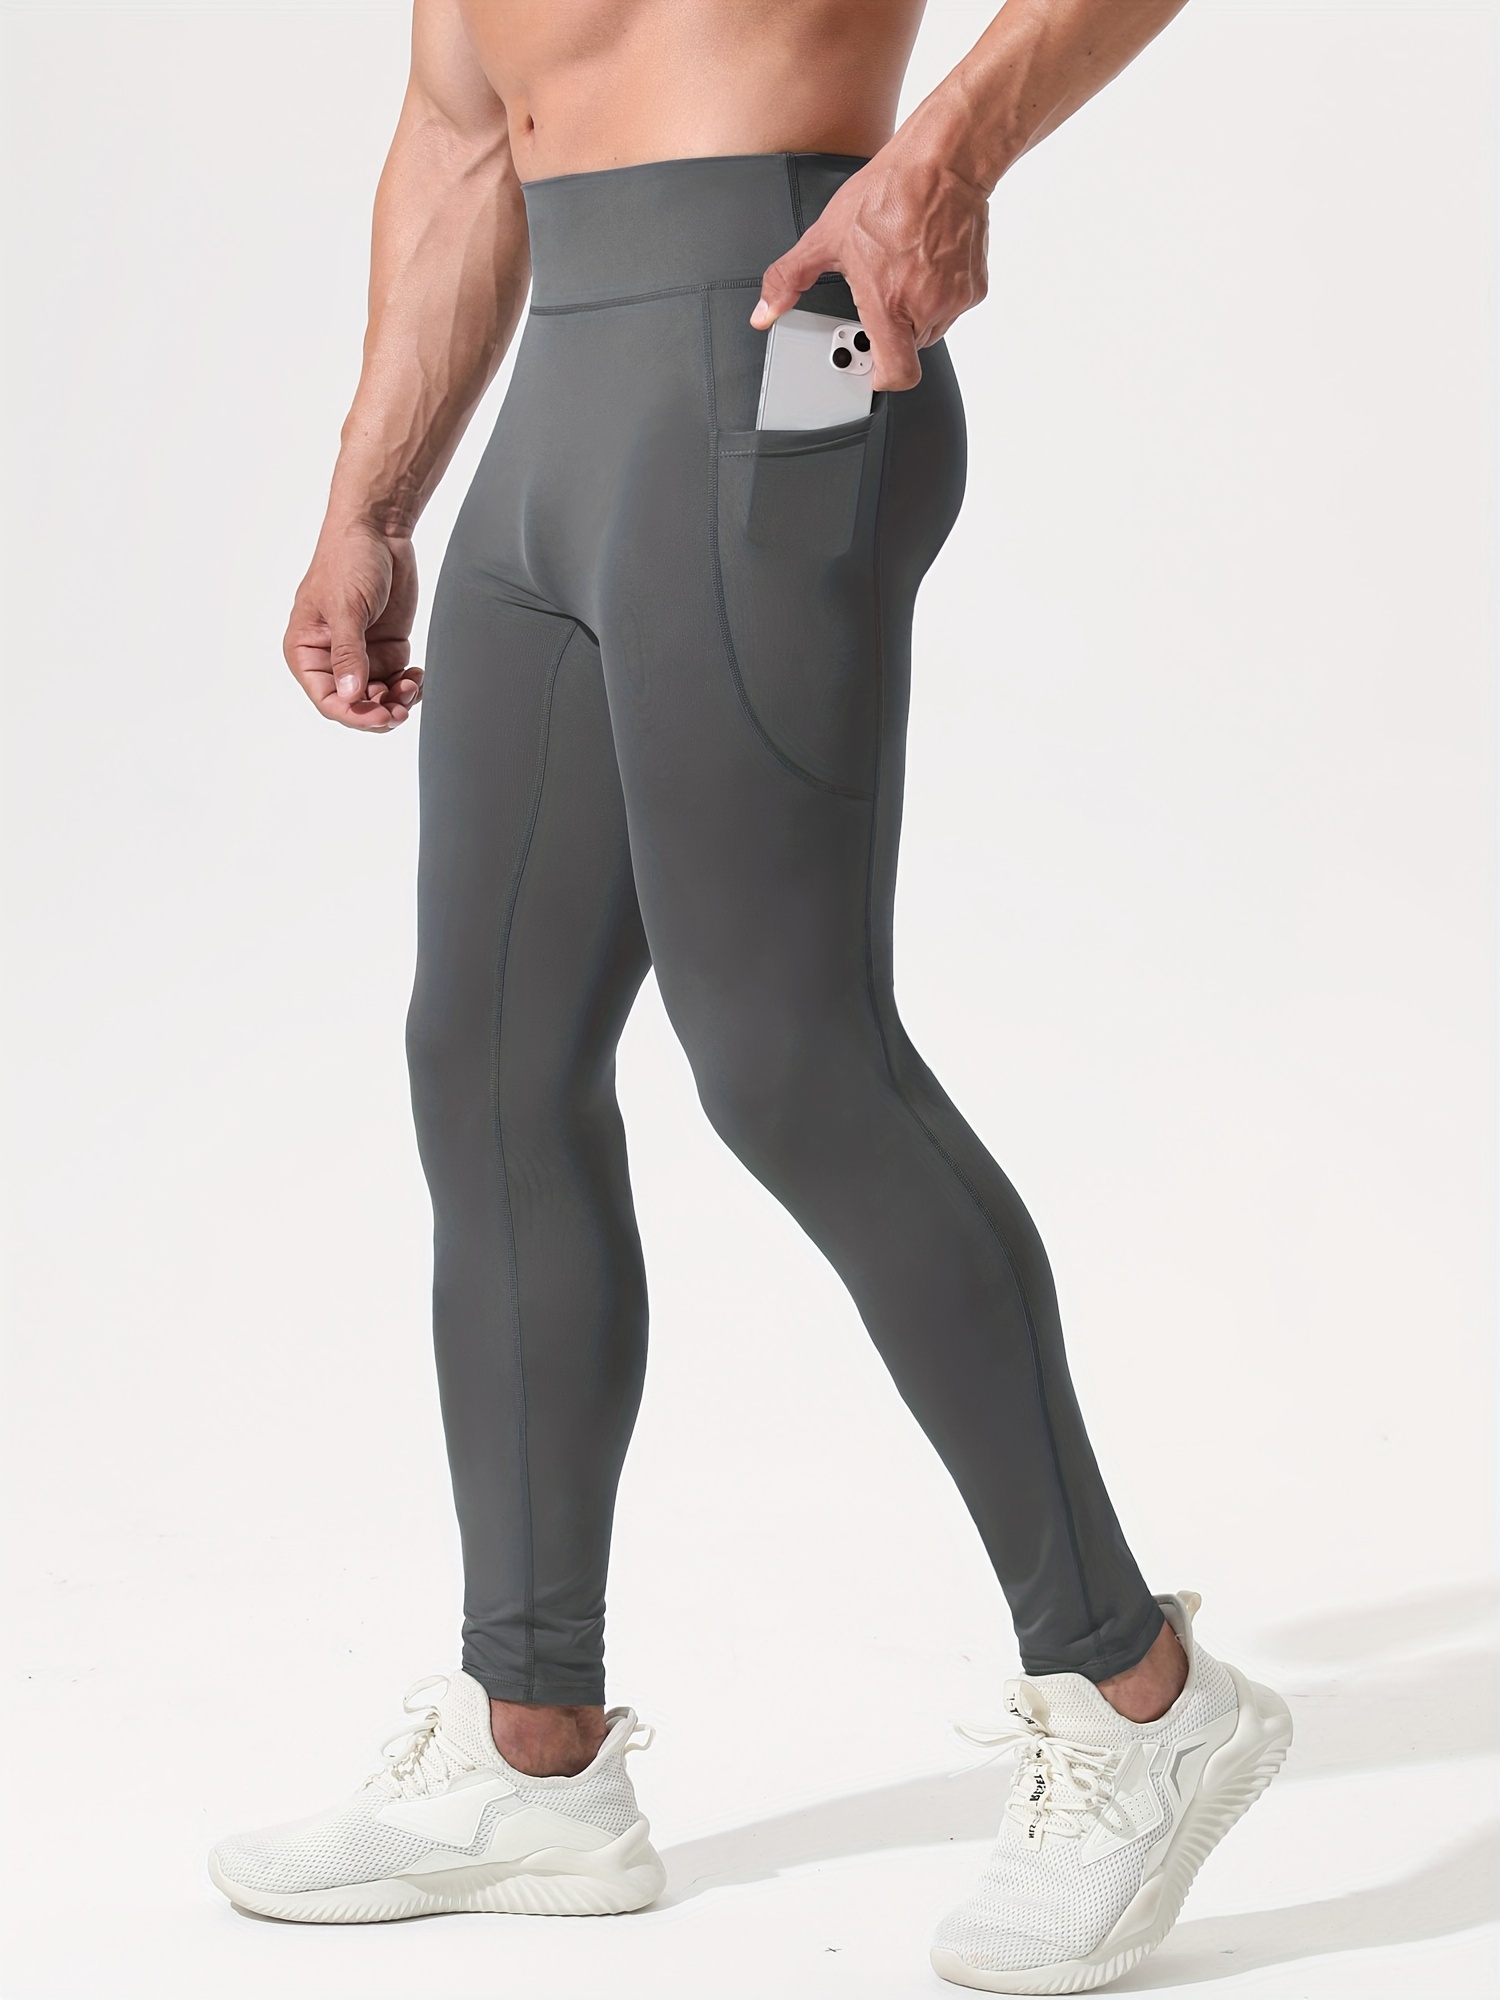 Men Fashion Pocket pants Sports Leggings Compression Pants Jogging